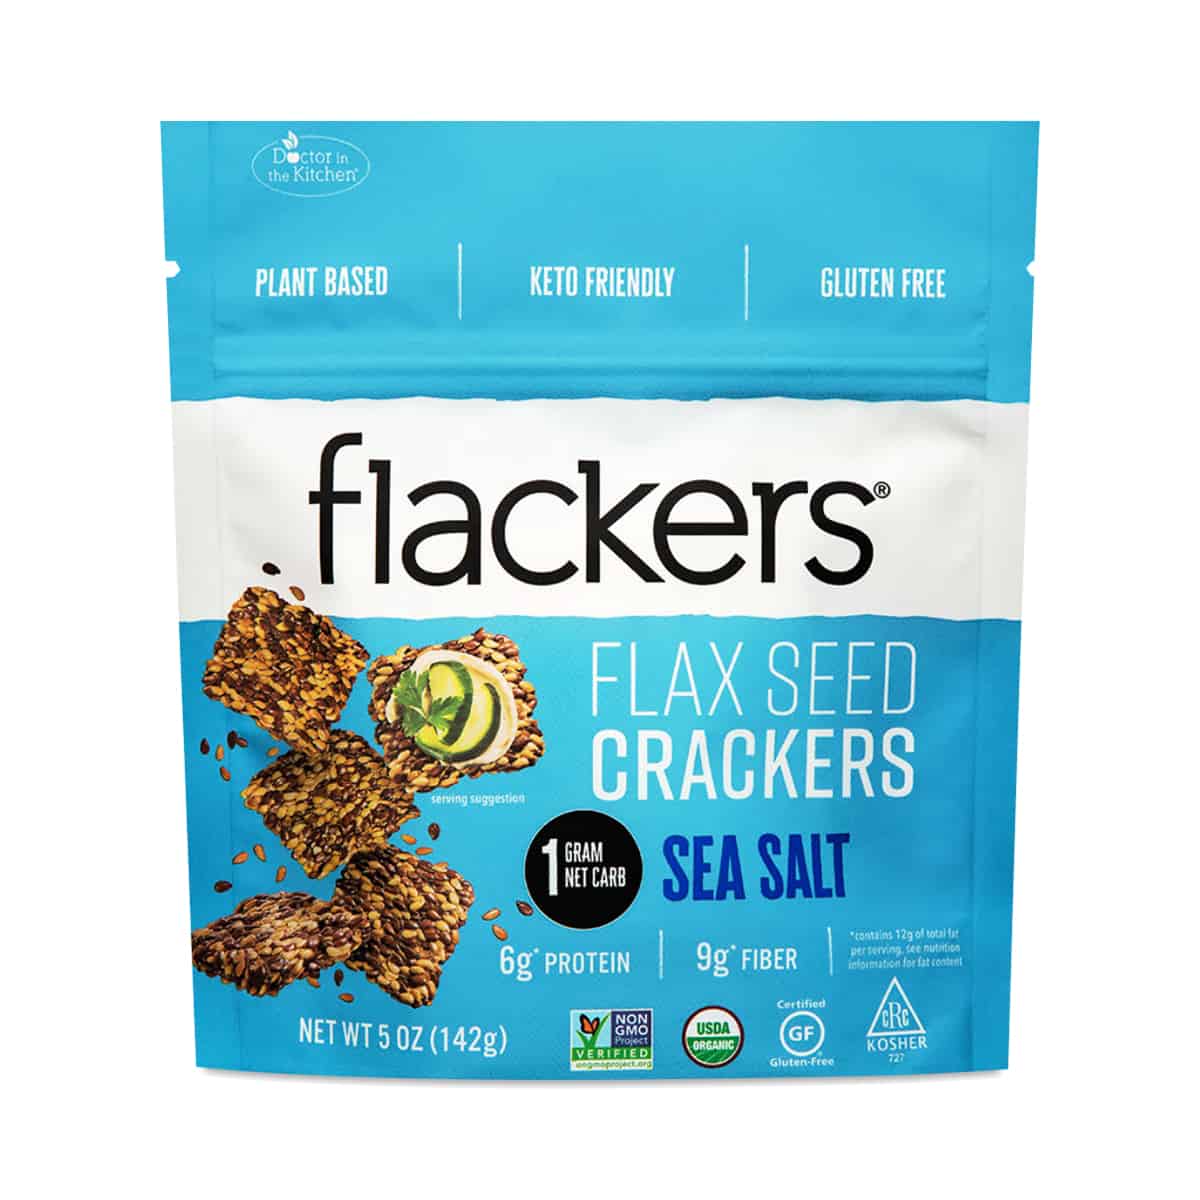 Flackers crackers.